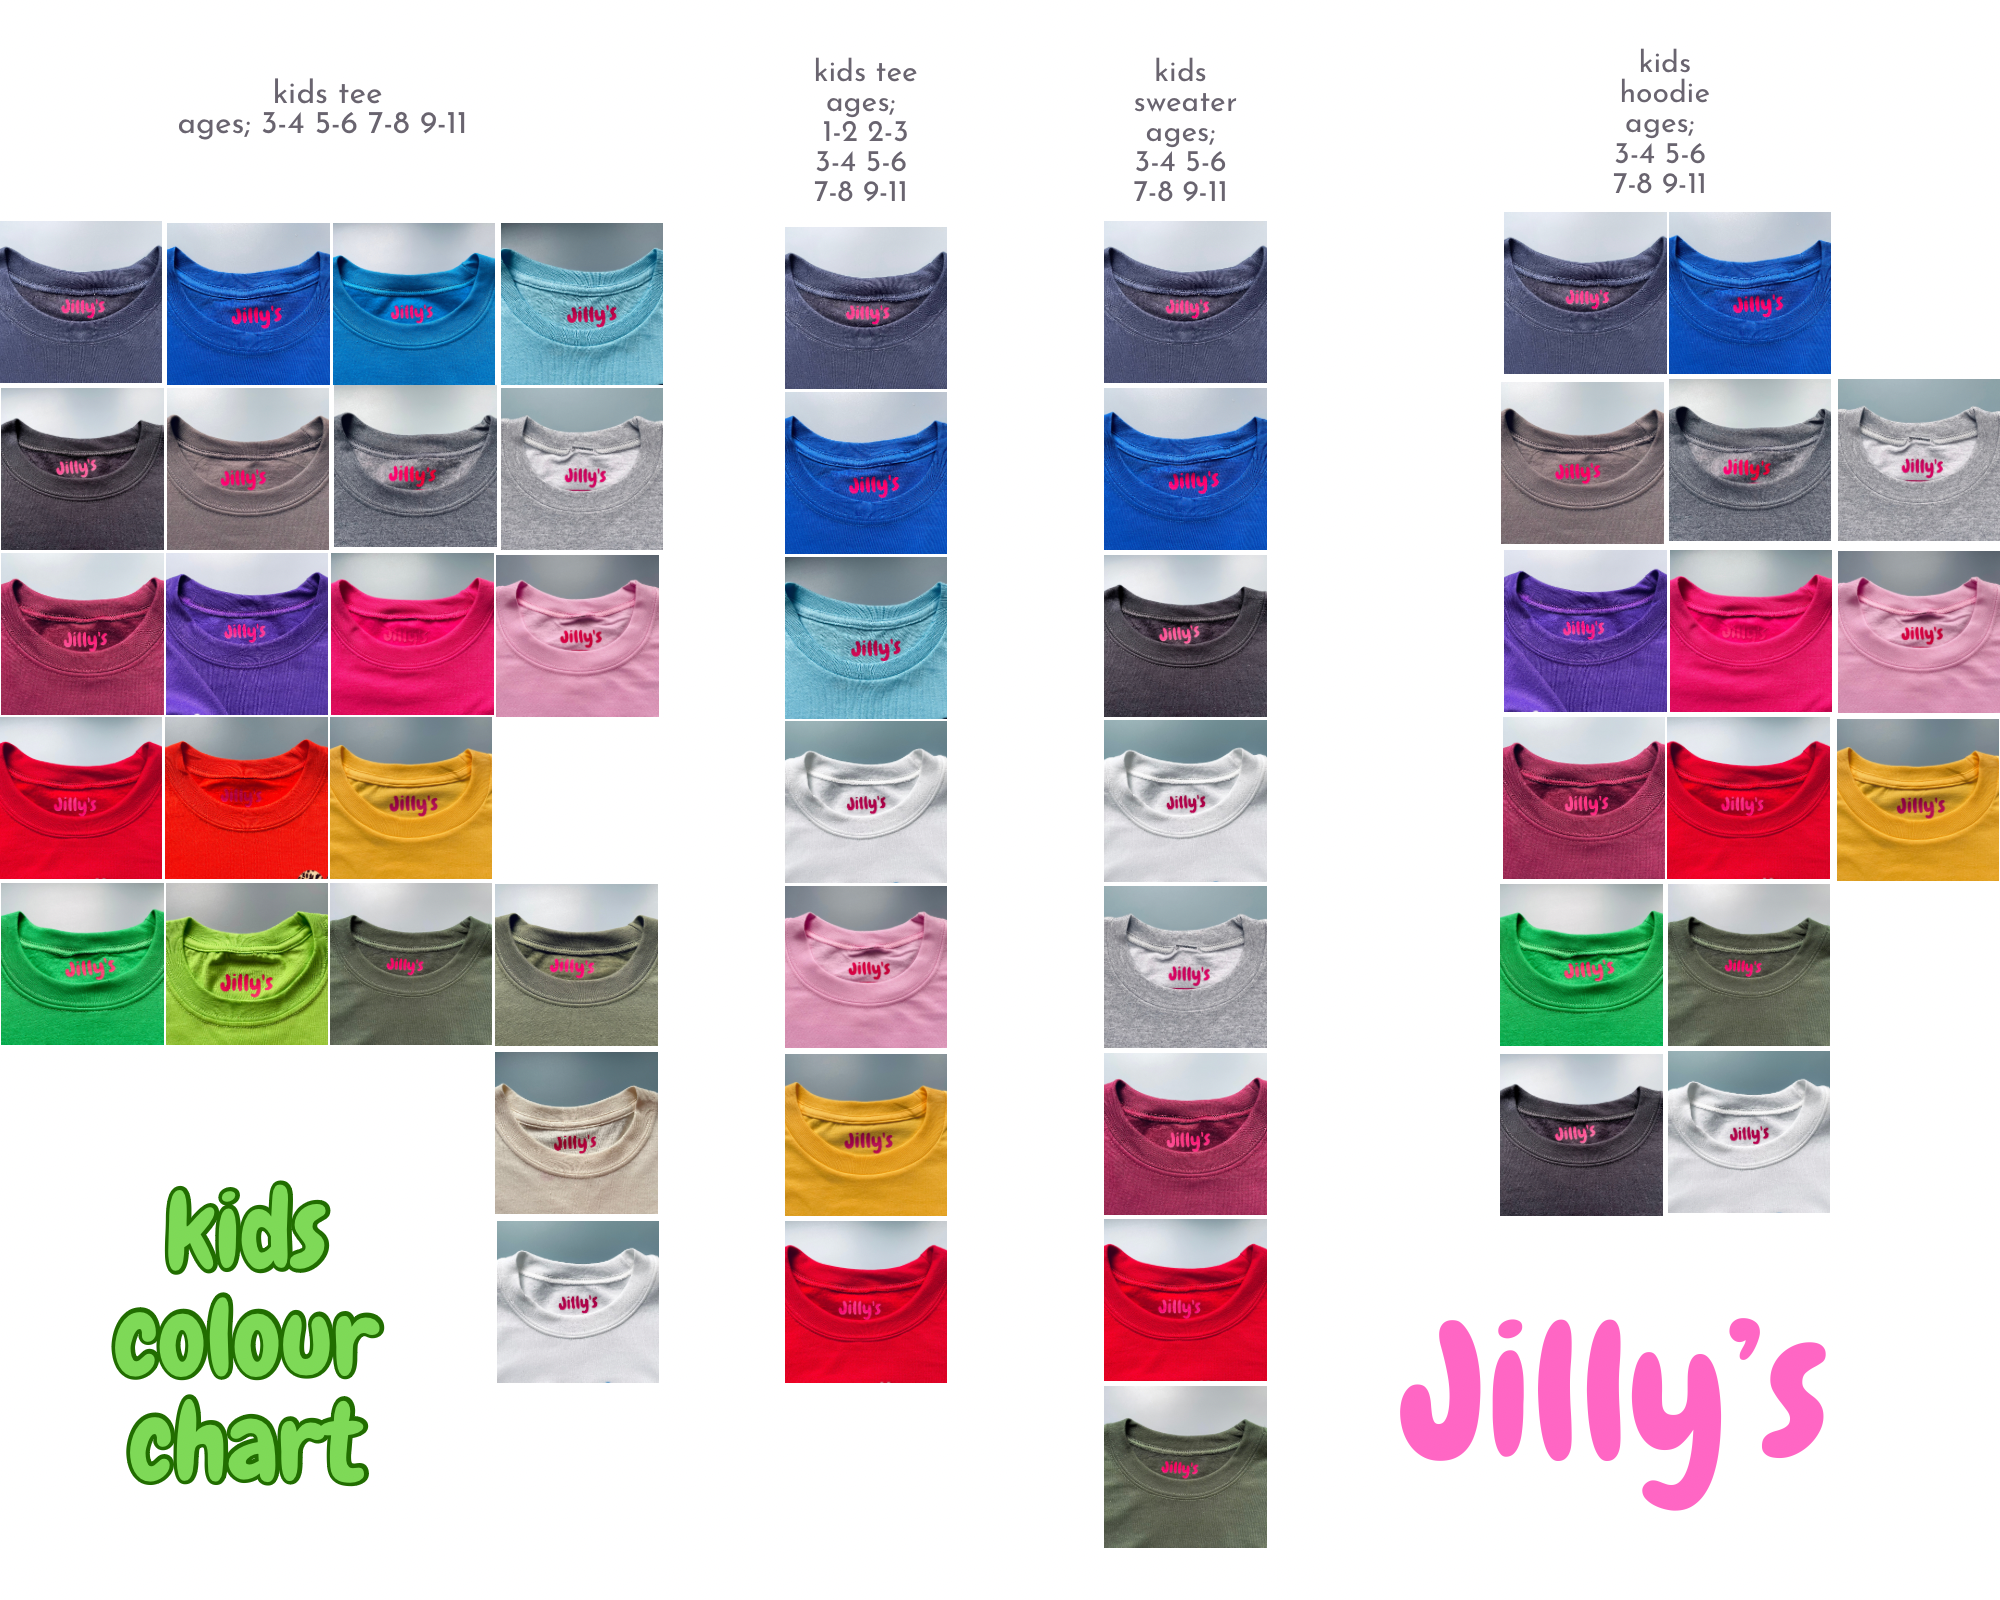 Jilly’s kids colour chart